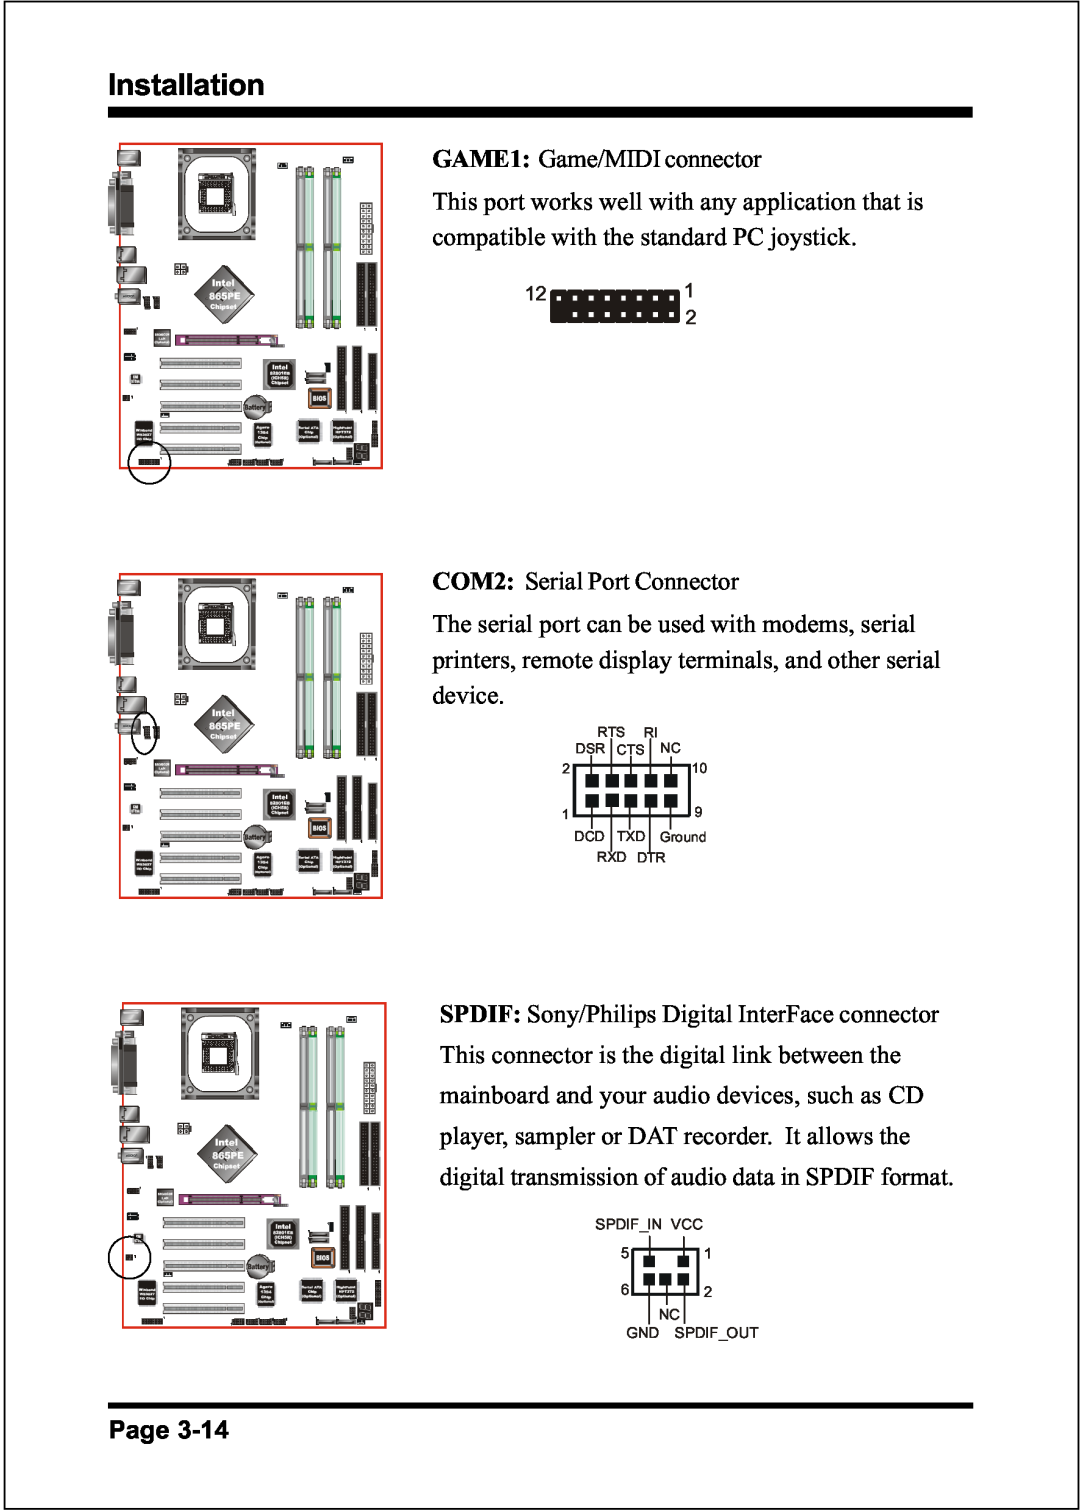 Intel FSB800 (PC3200), FSB800 (PC2700), FSB800 / DDR333 (PC2700), FSB533 Installation, GAME1: Game/MIDI connector 